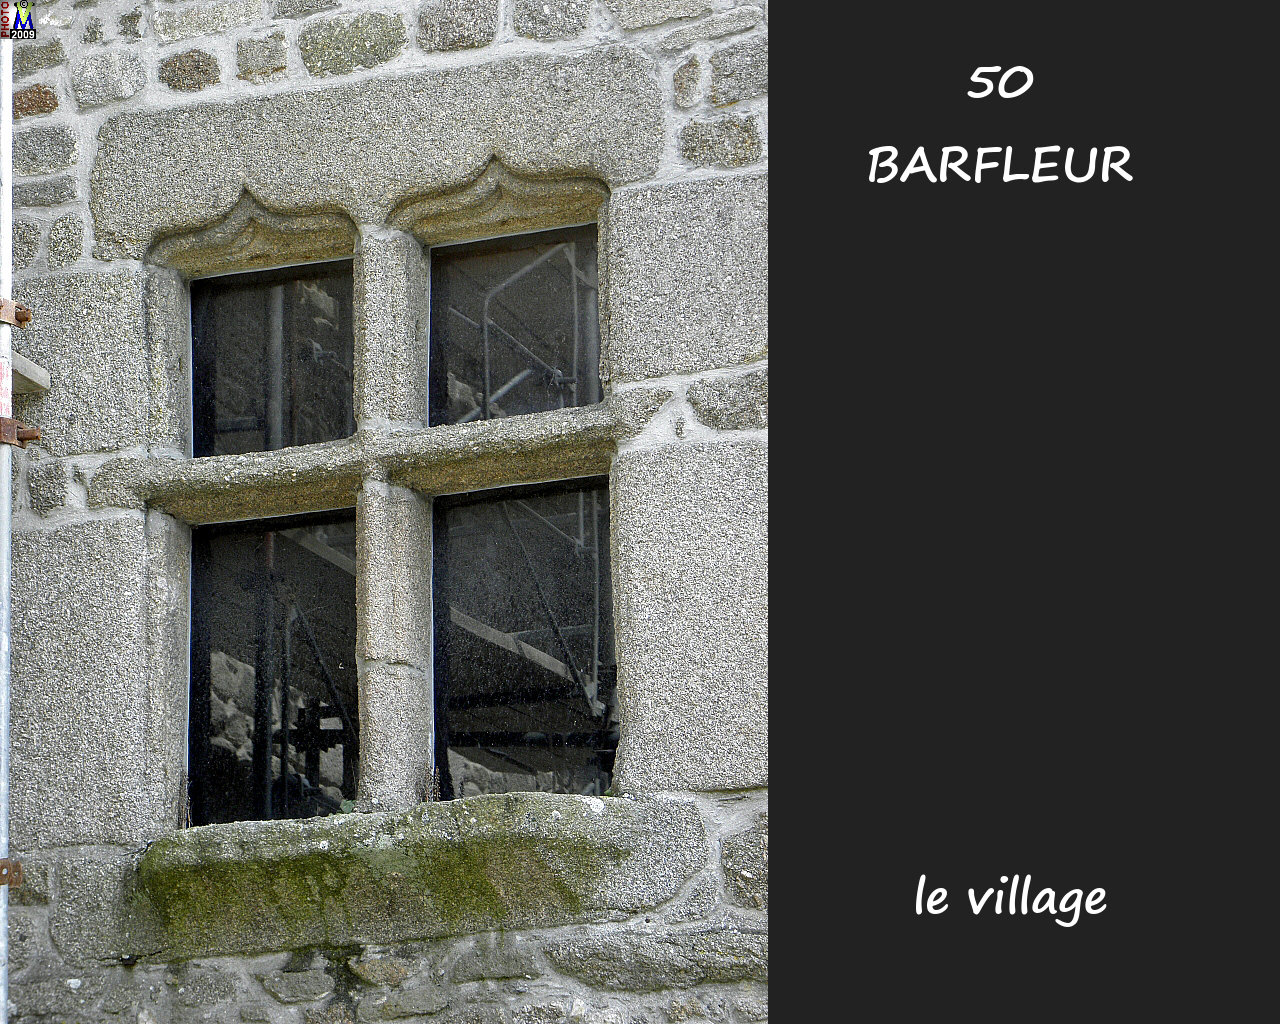 50BARFLEUR_village_128.jpg